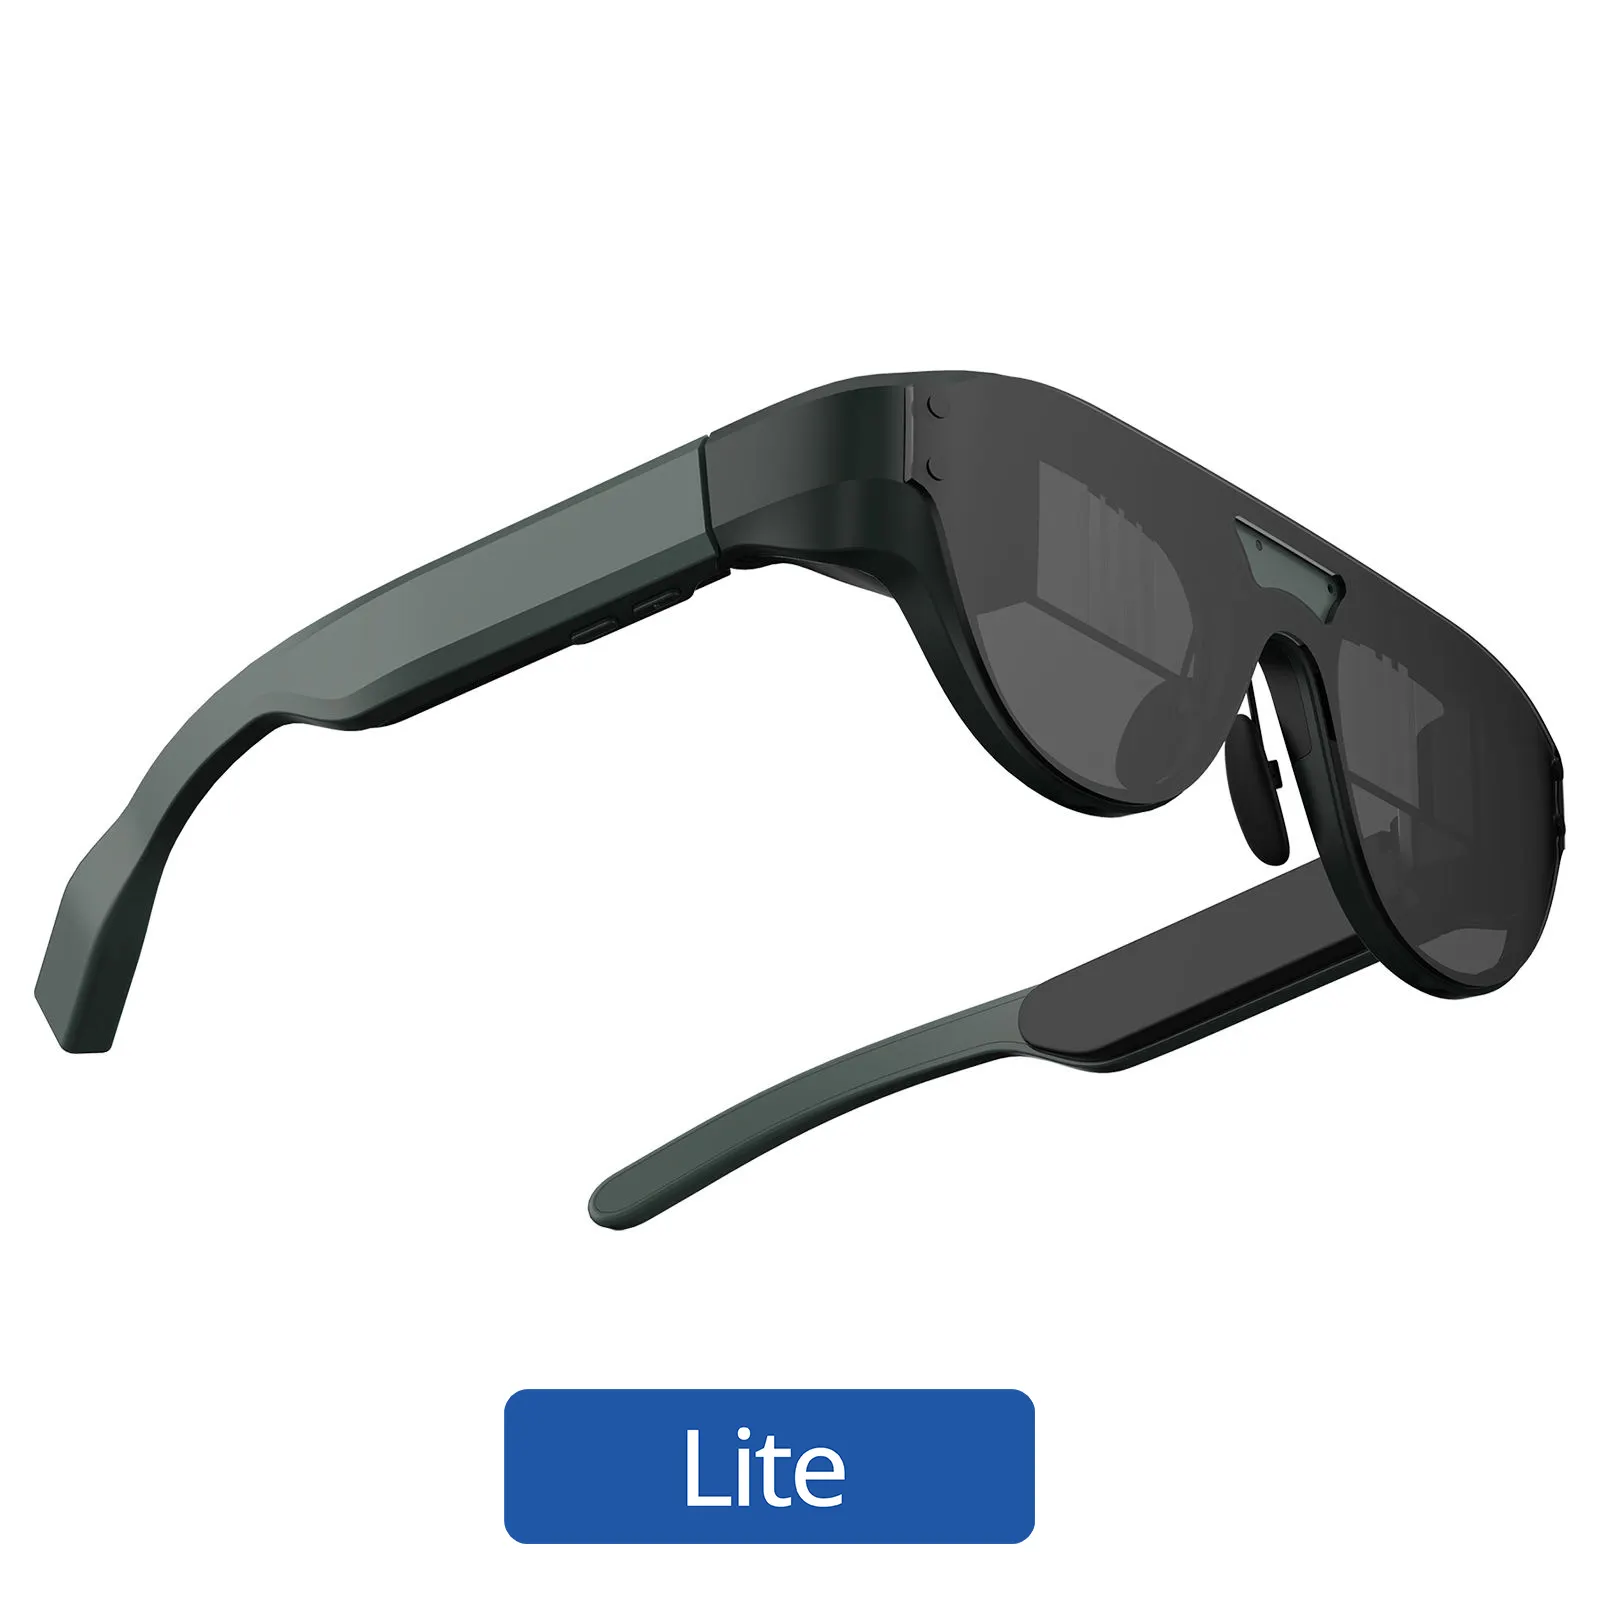 Huagui1115 Leion Hey Lite ทดลองใช้งานฟรี 60 วันเครื่องช่วยฟังที่มีความบกพร่องทางการได้ยินรองรับแว่นตา Ar หลายภาษา